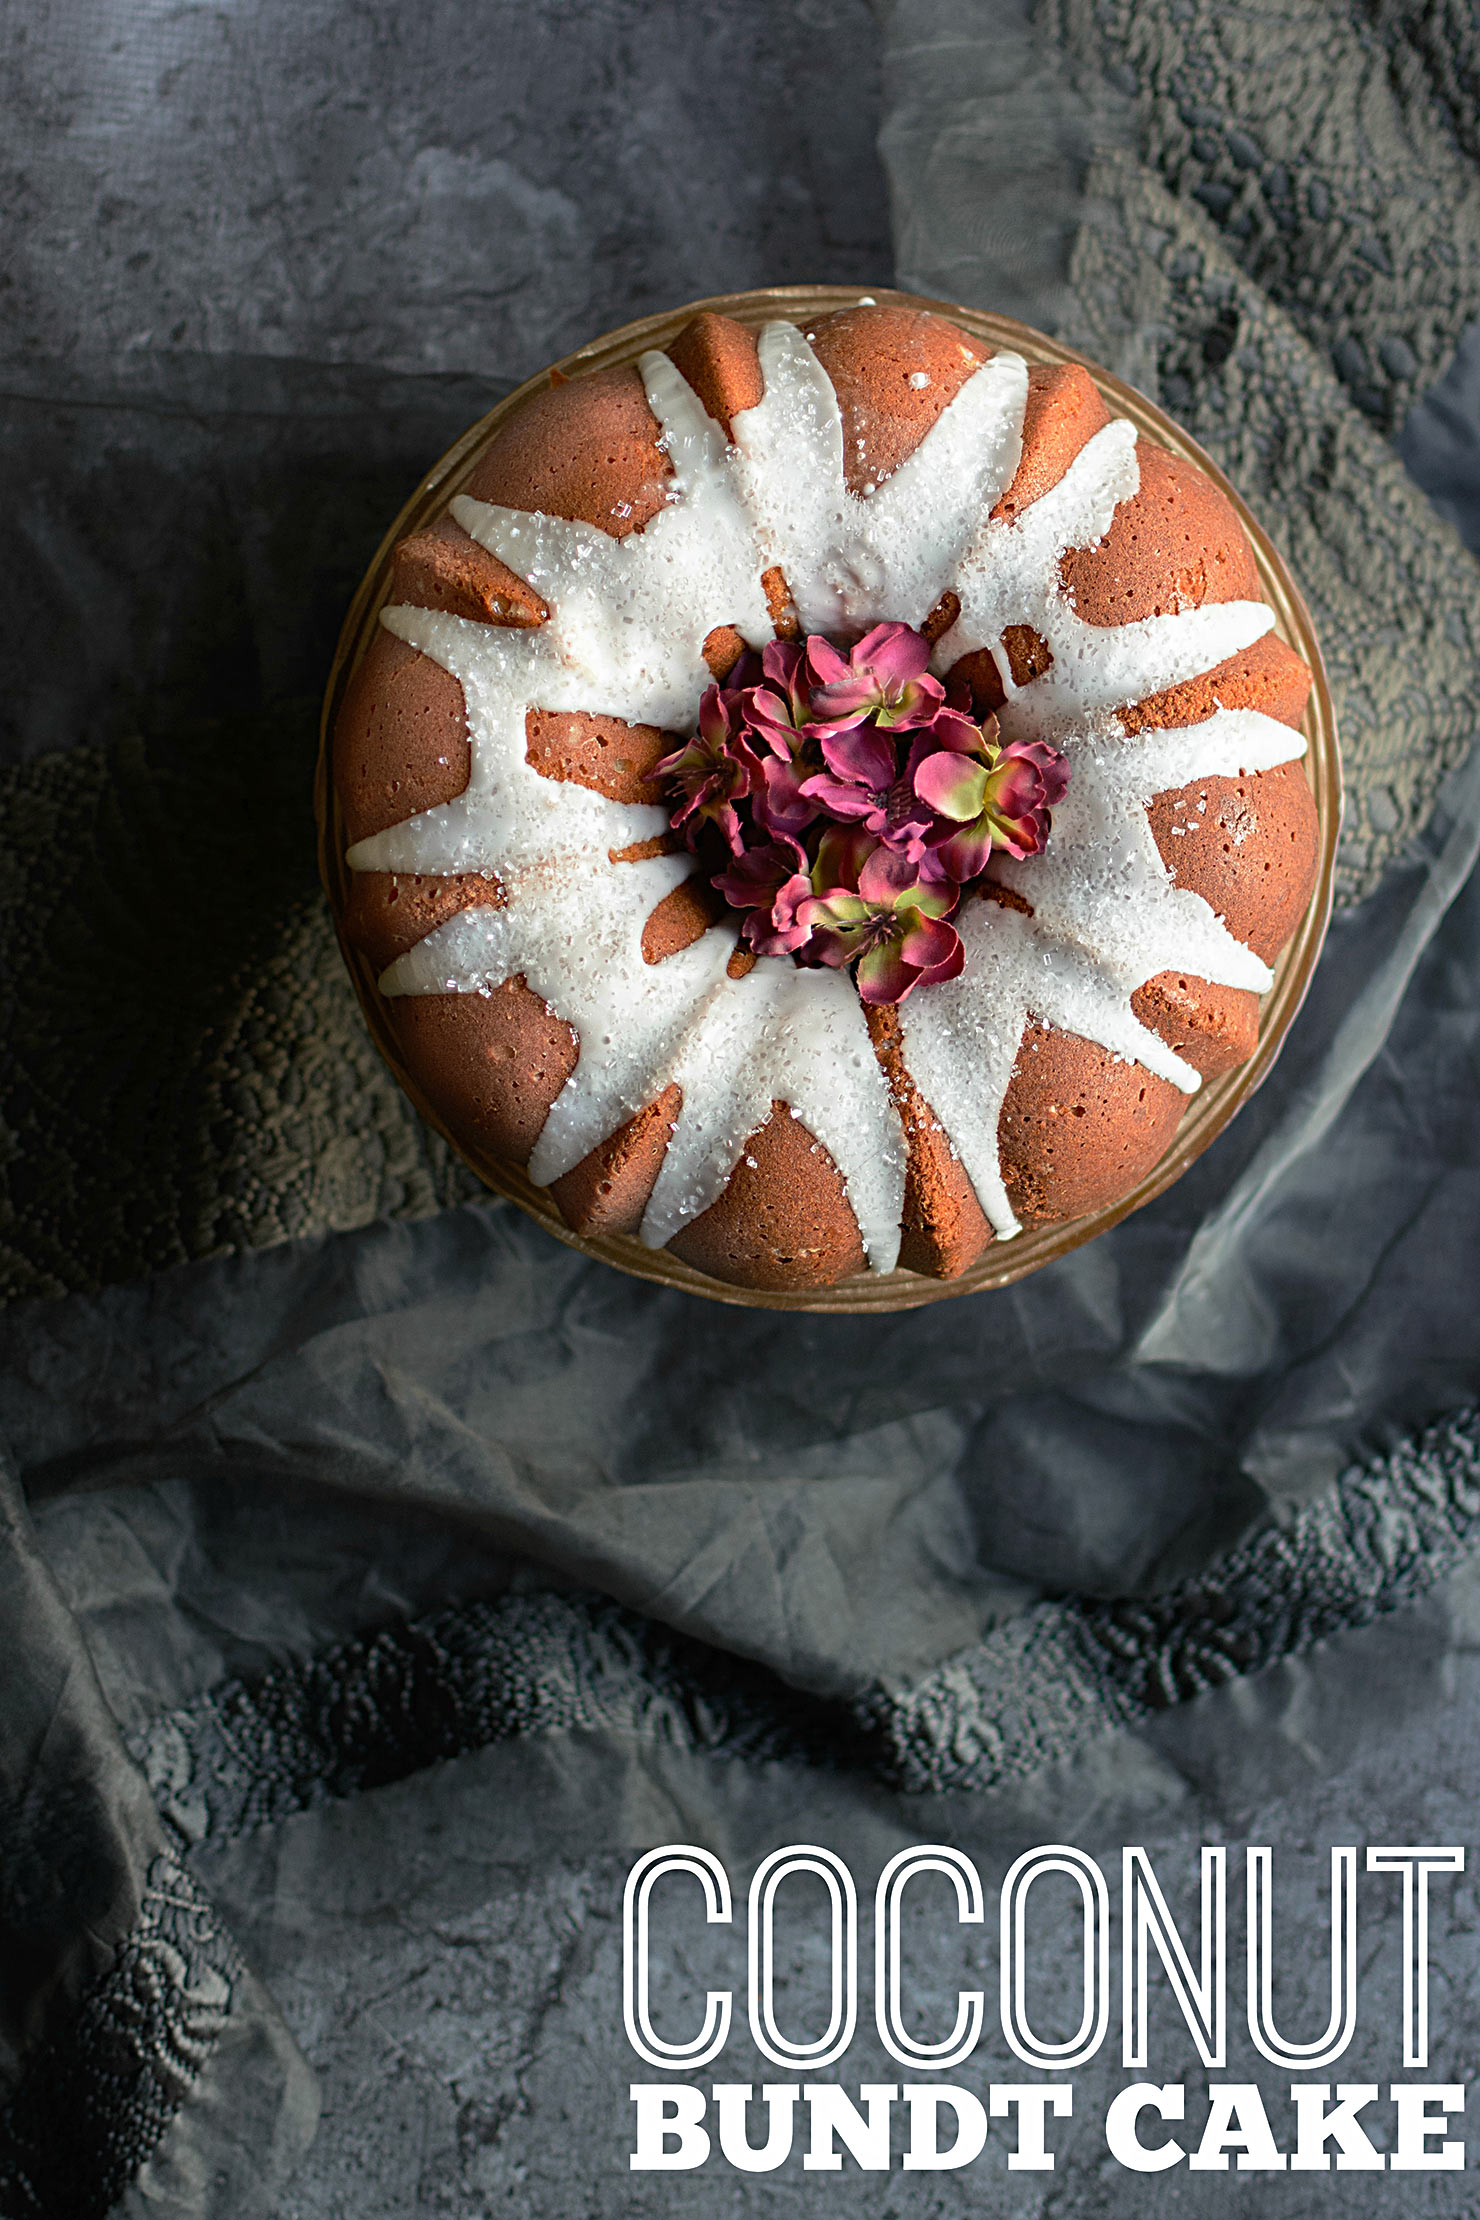 Coconut Bundt Cake | Kailley's Kitchen